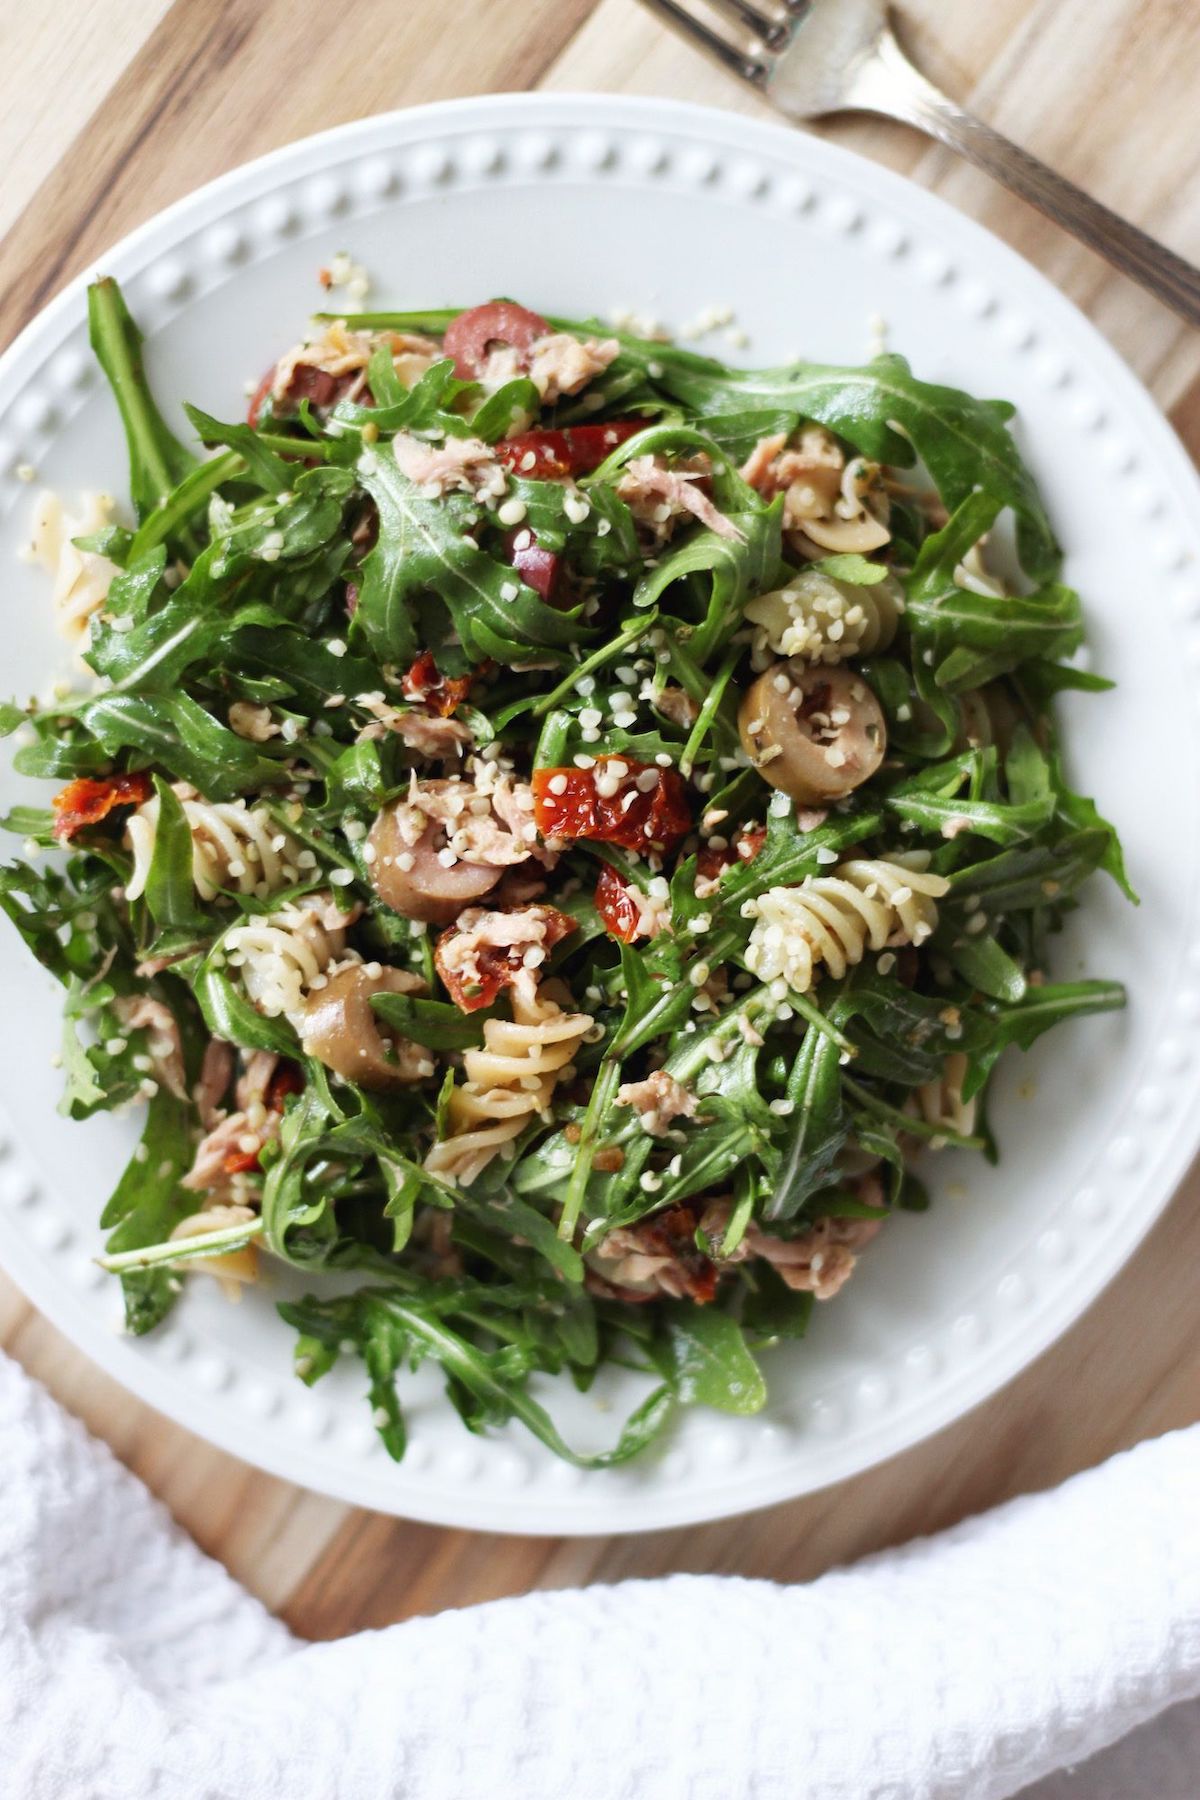 10 Mediterranean Diet Approved Recipes to Add to Your Meal Plan - Mediterranean Tuna Pasta Salad